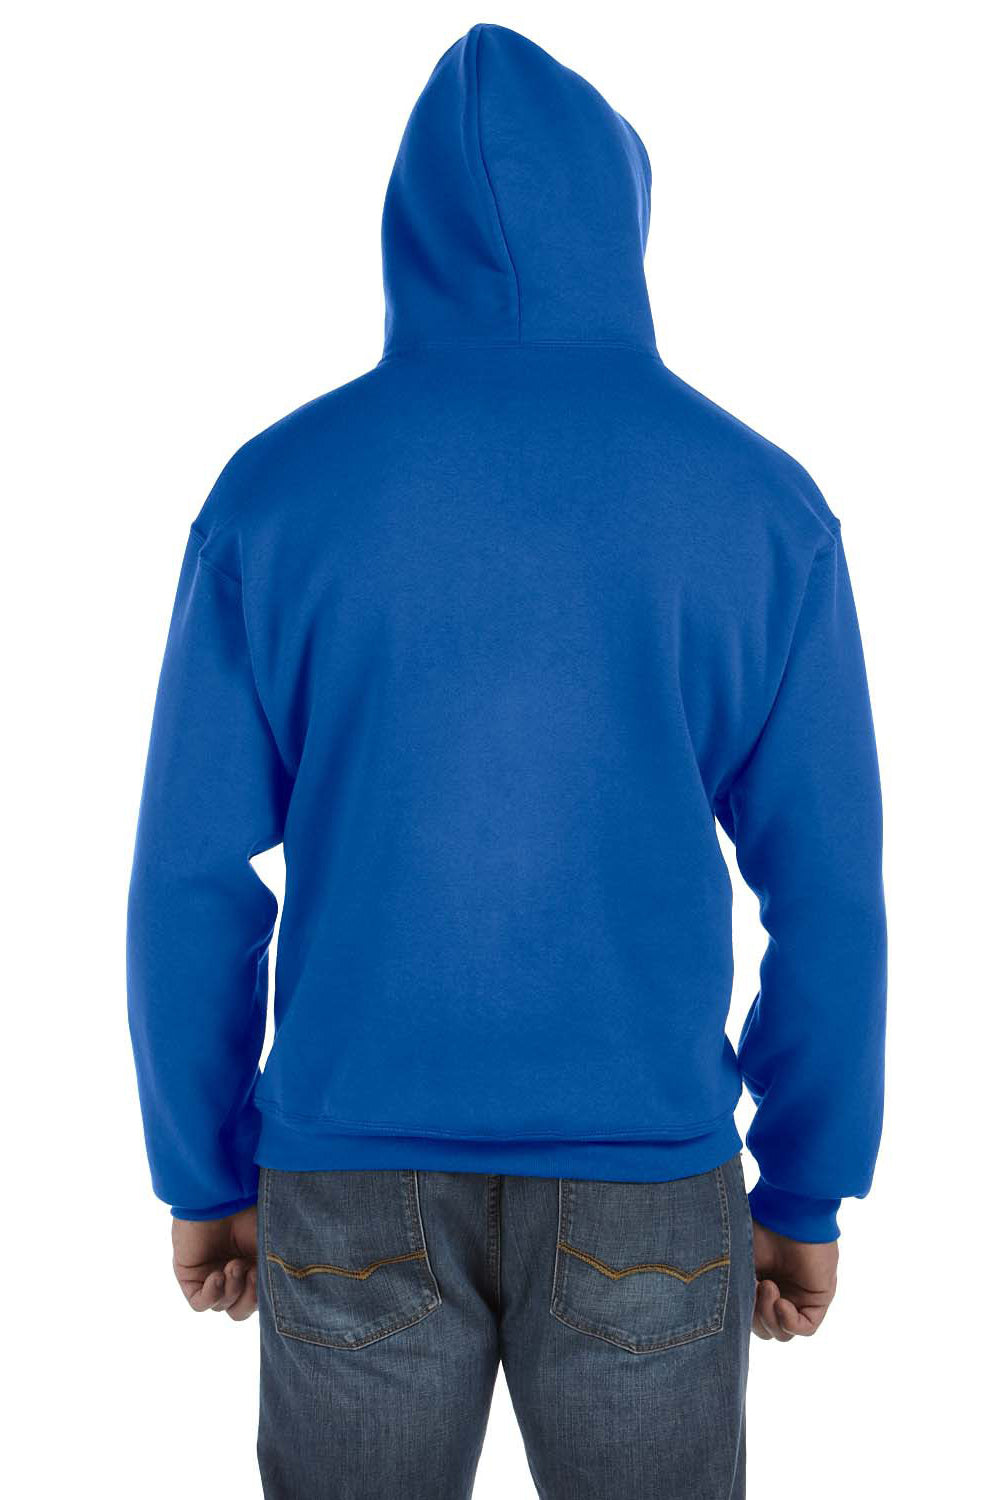 Fruit Of The Loom 82130 Mens Supercotton Fleece Hooded Sweatshirt Hoodie Royal Blue Back